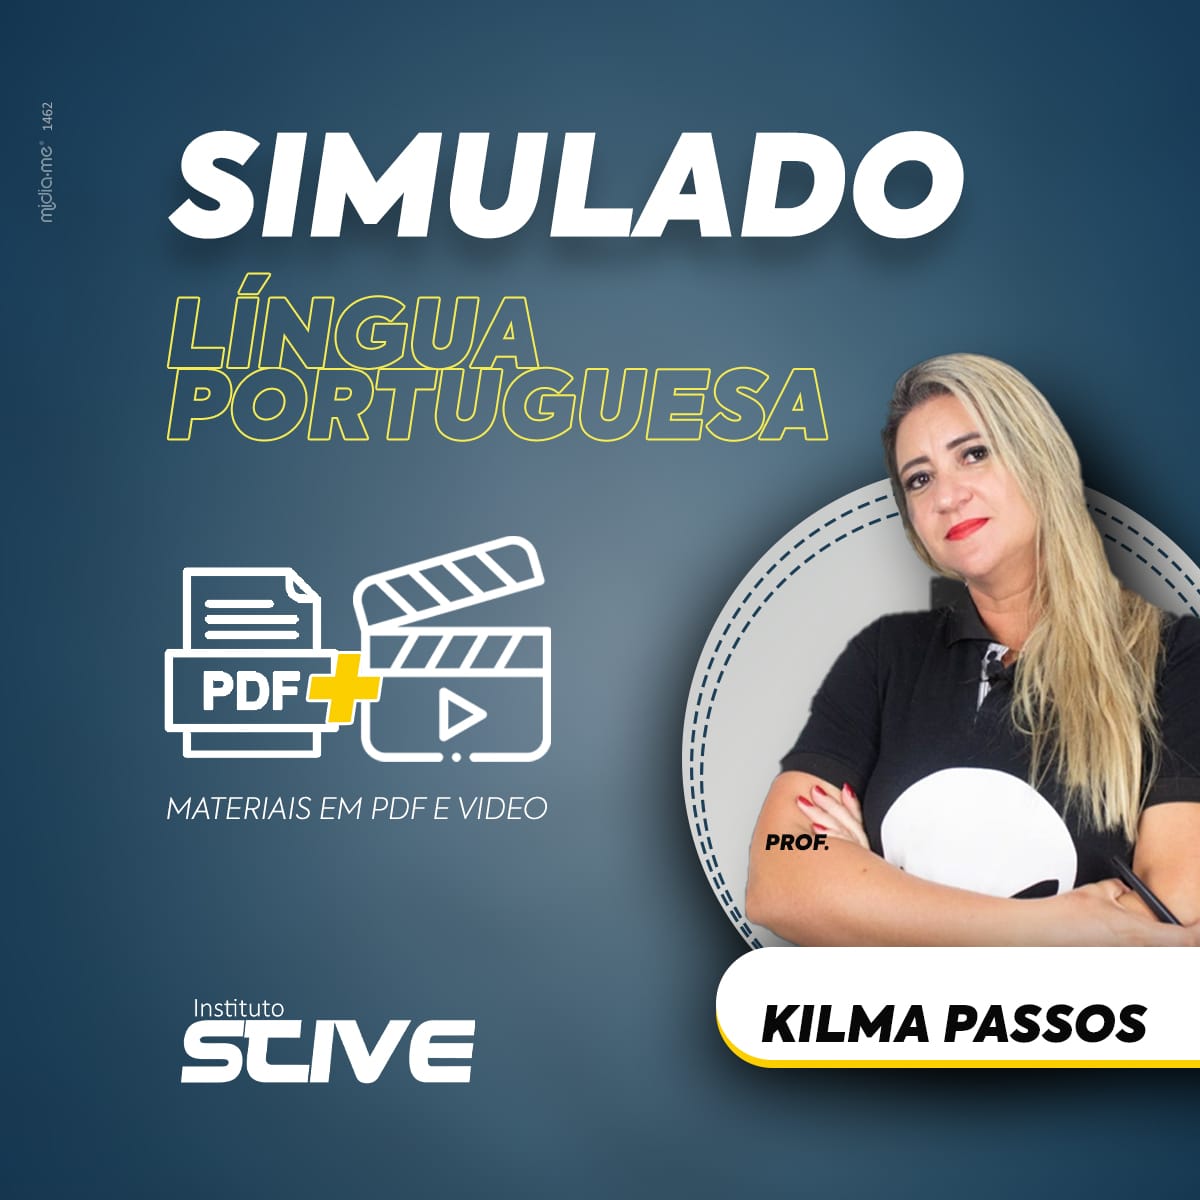 SIMULADO DE LNGUA PORTUGUESA - KILMA PASSOS